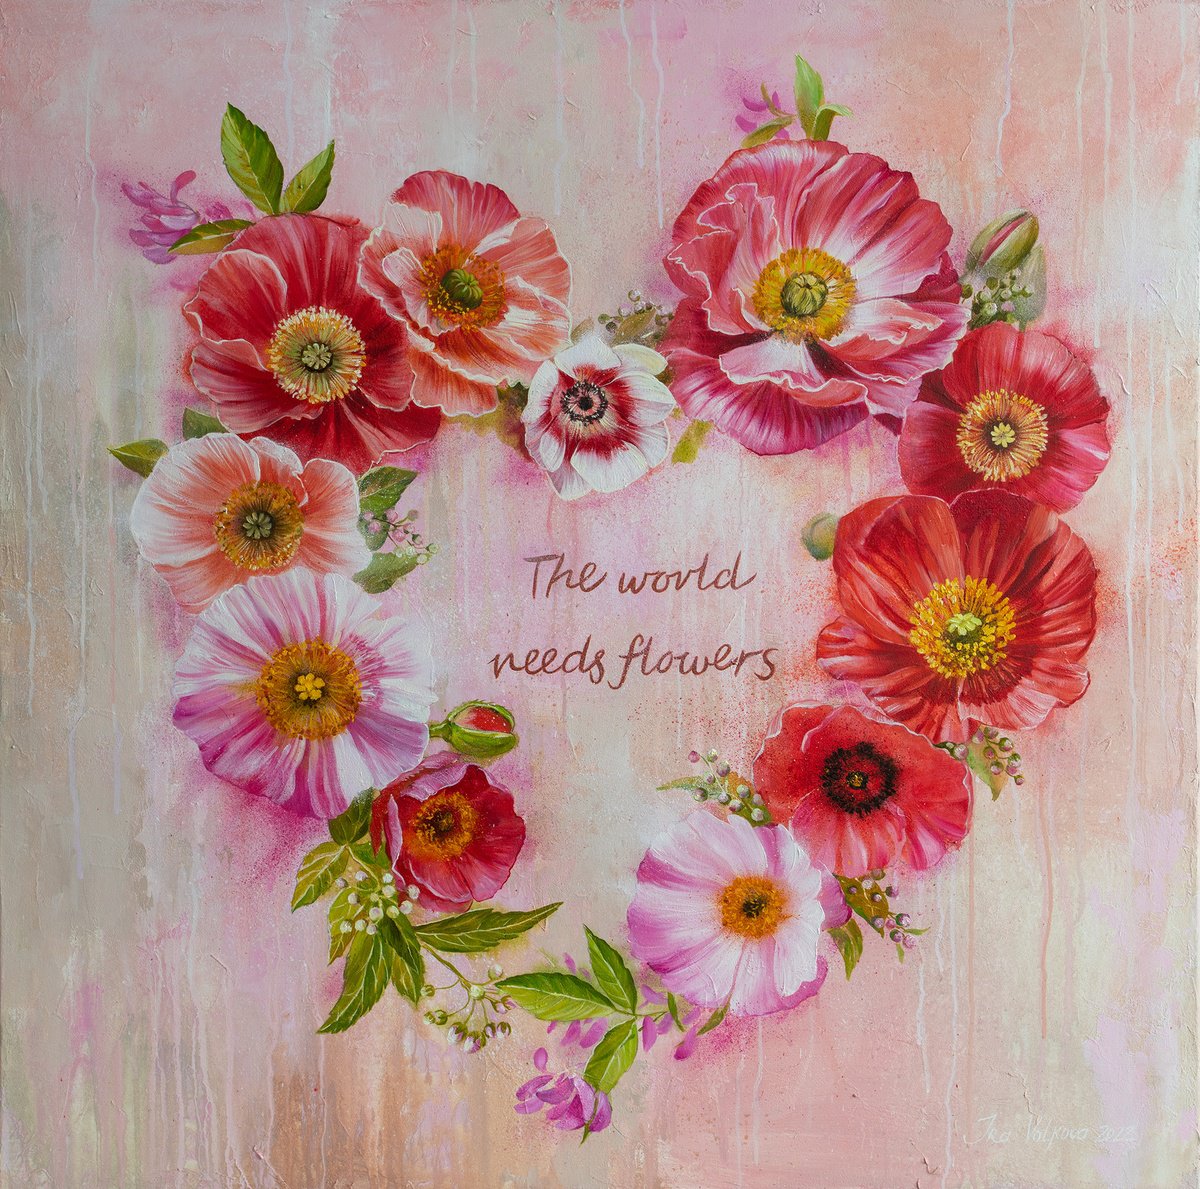 The world needs flowers by Ira Volkova